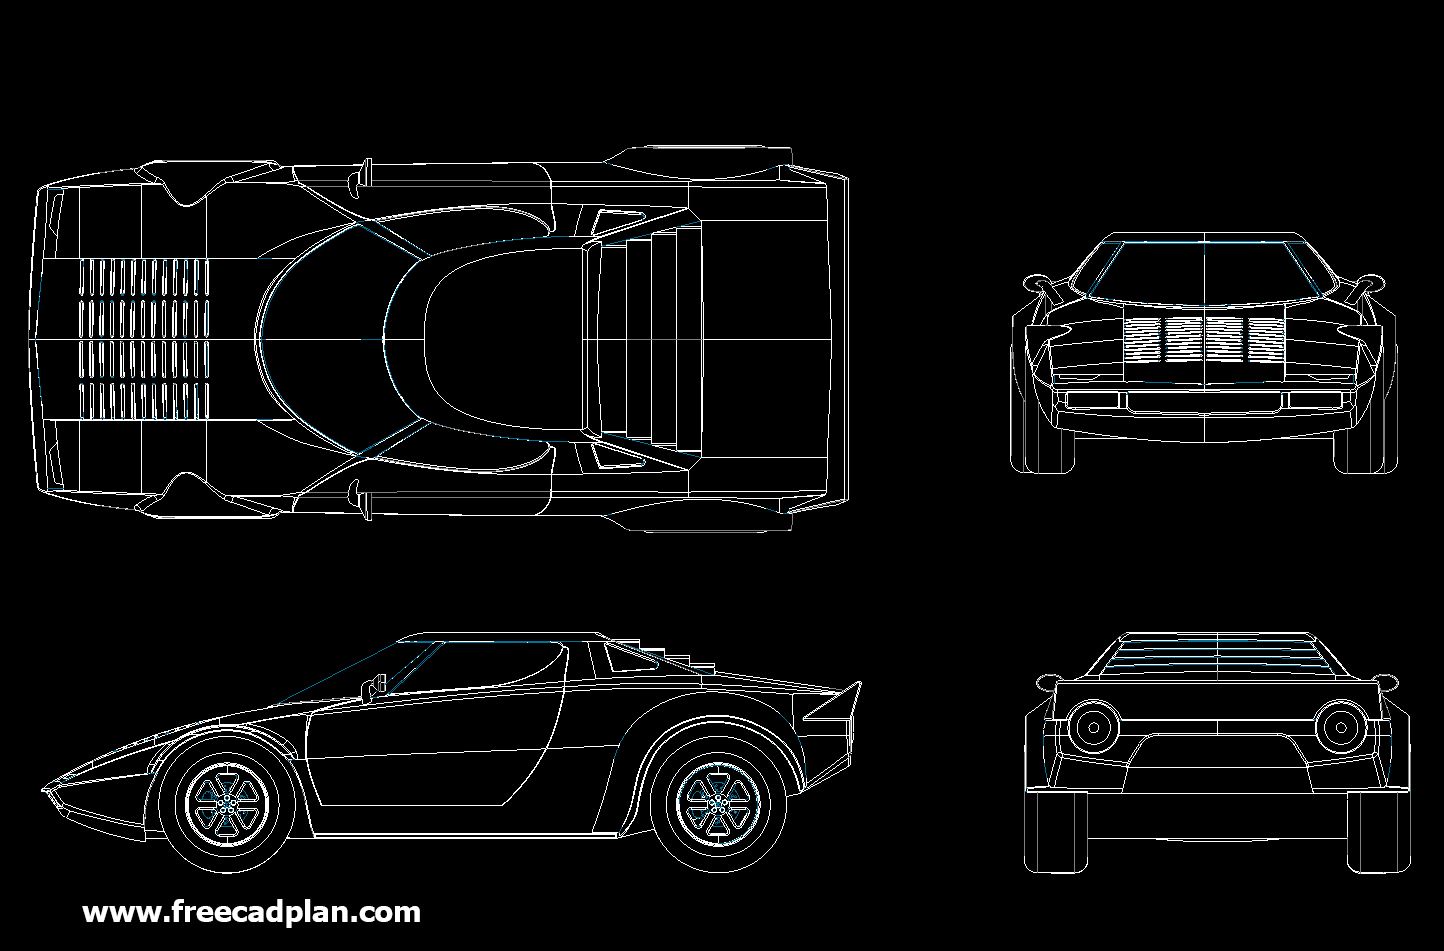 Lancia Stratos HF CAR Bloc CAO DWG